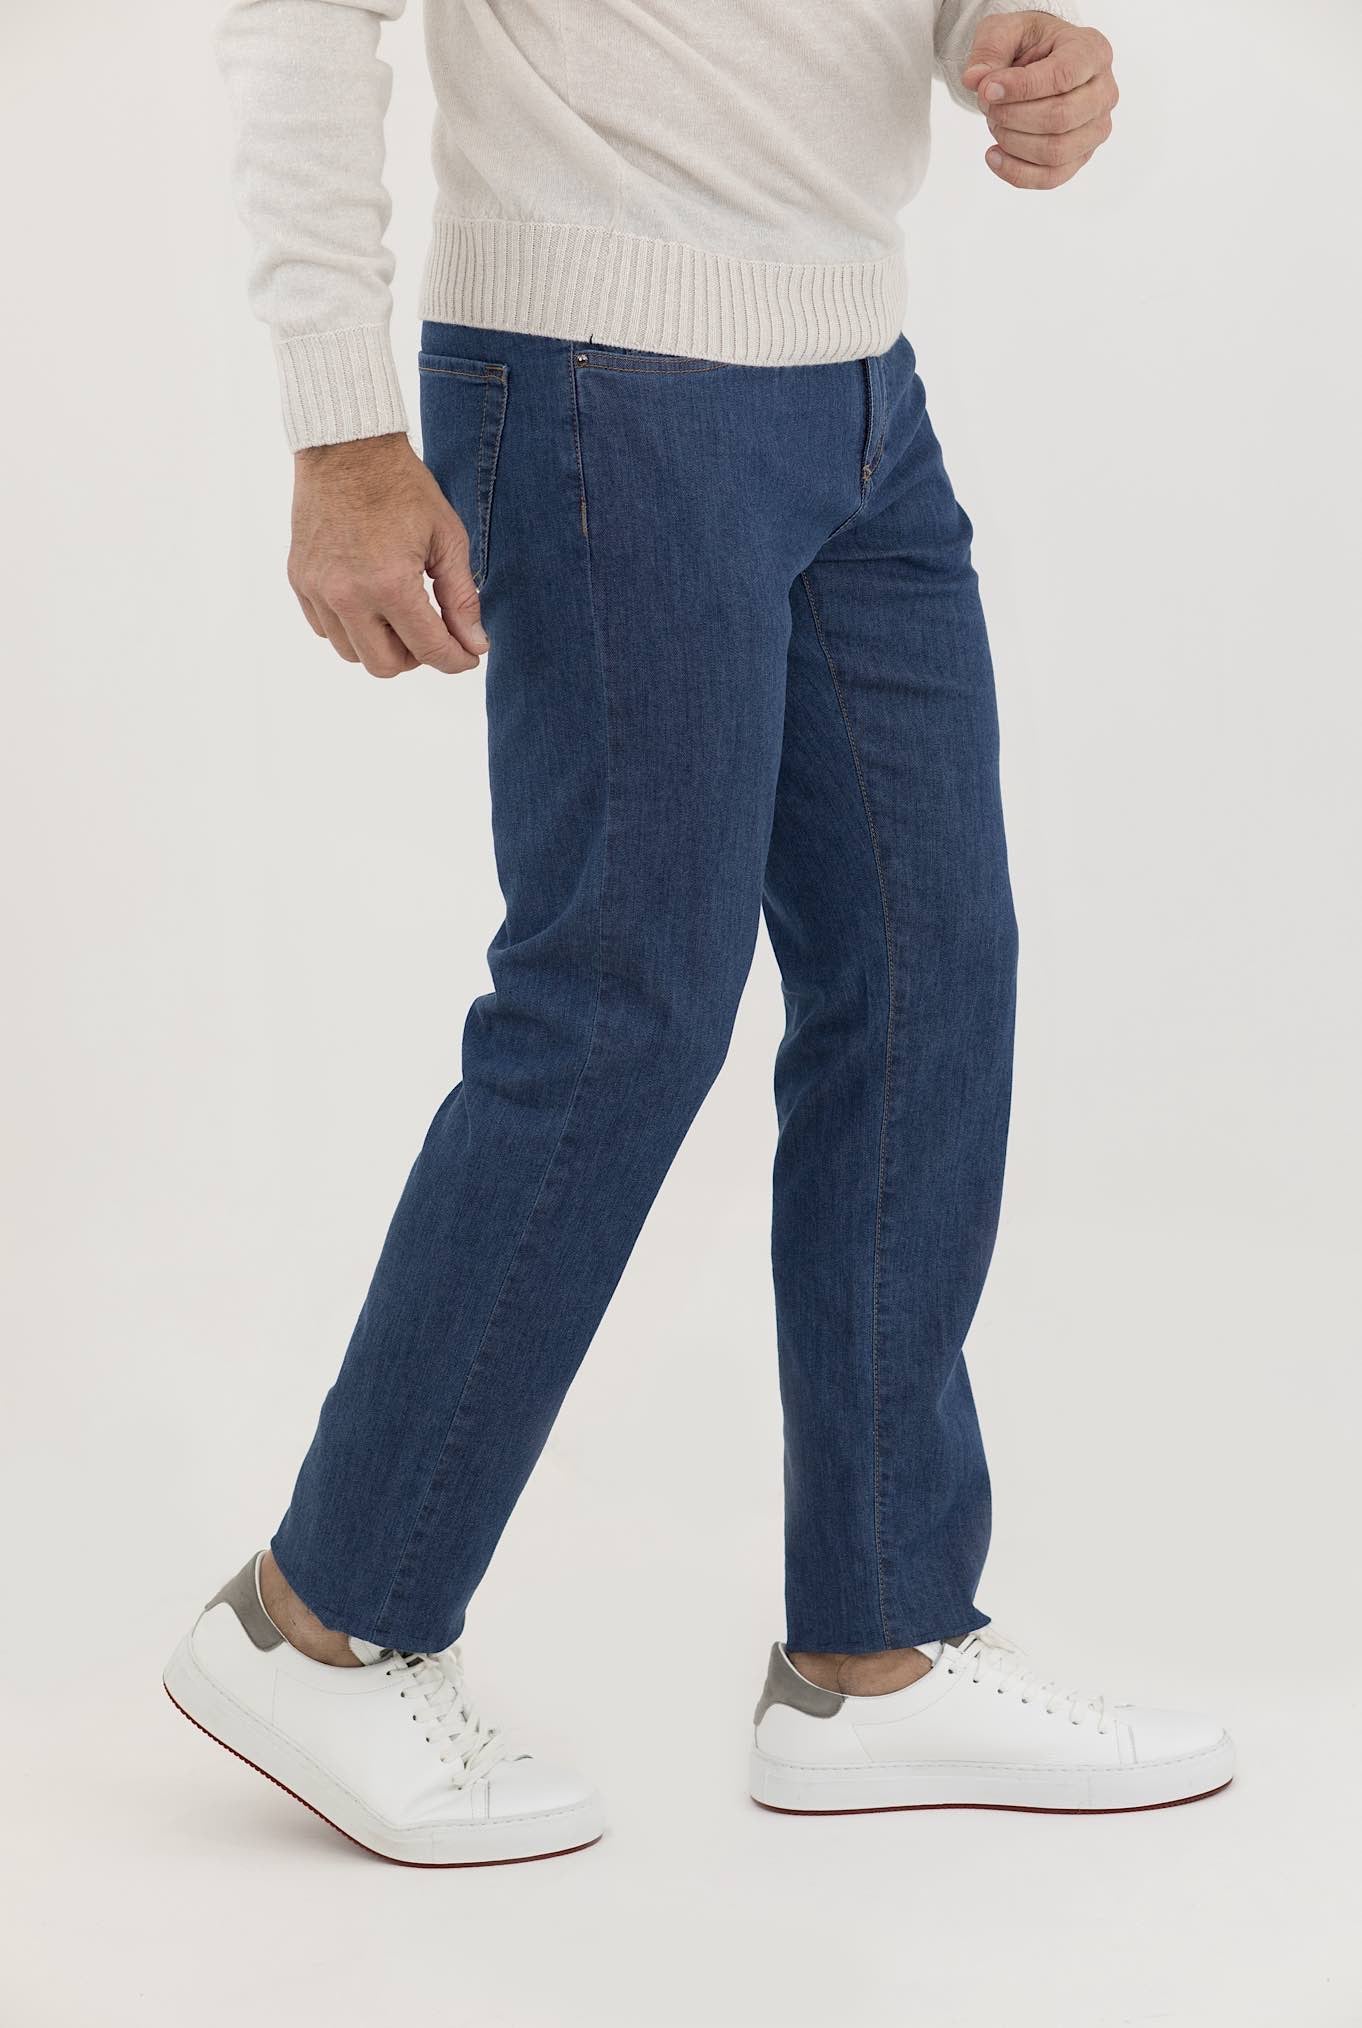 CANALI Jeans 5 Pockets Natural Indigo Medium Denim